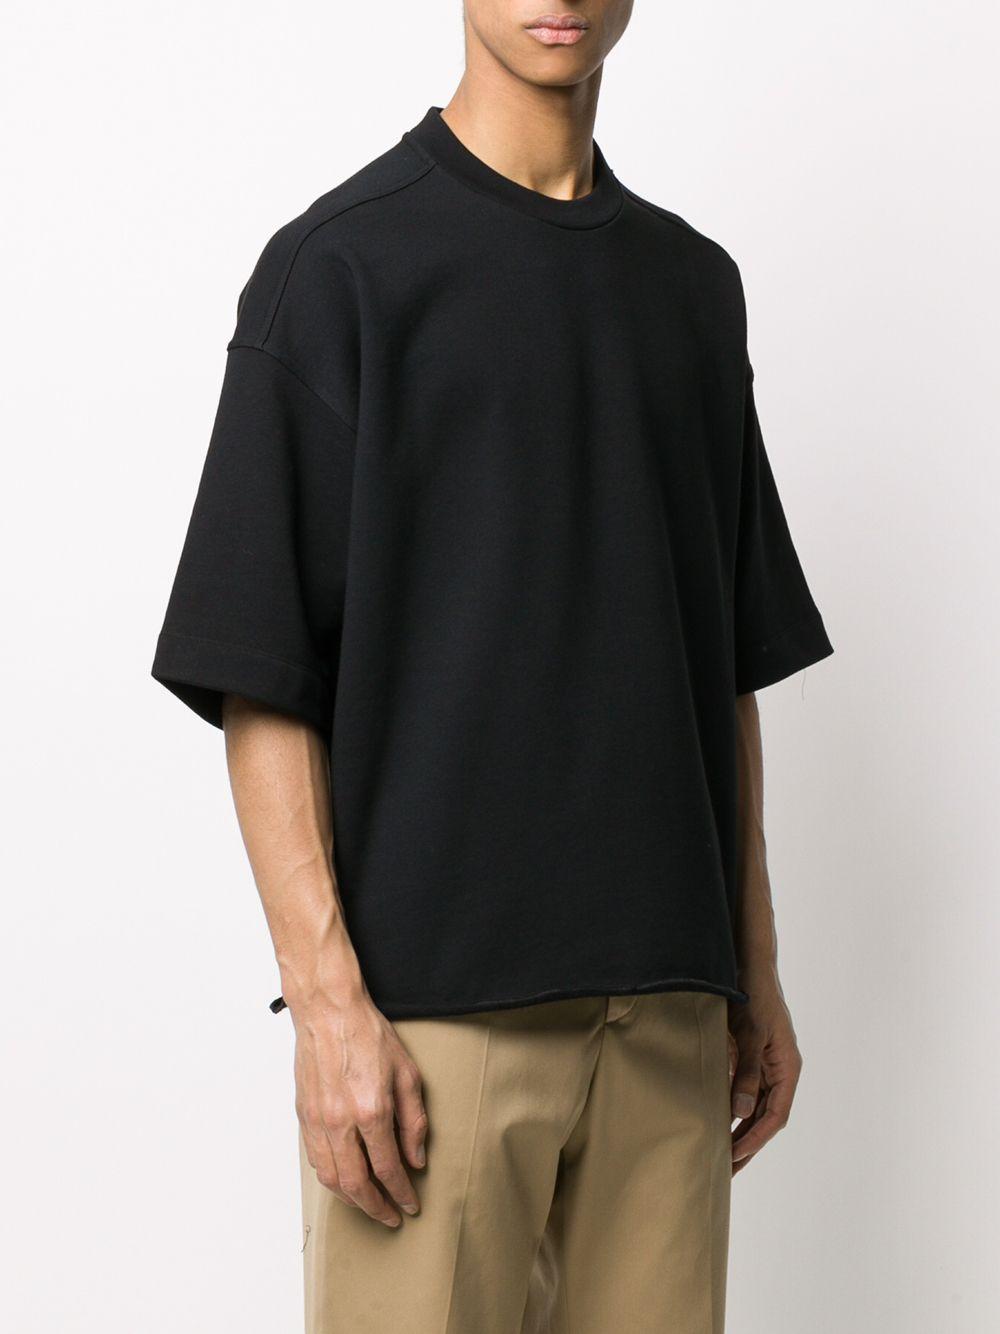 Jil Sander Oversized-fit Cotton T-shirt in Black for Men - Lyst